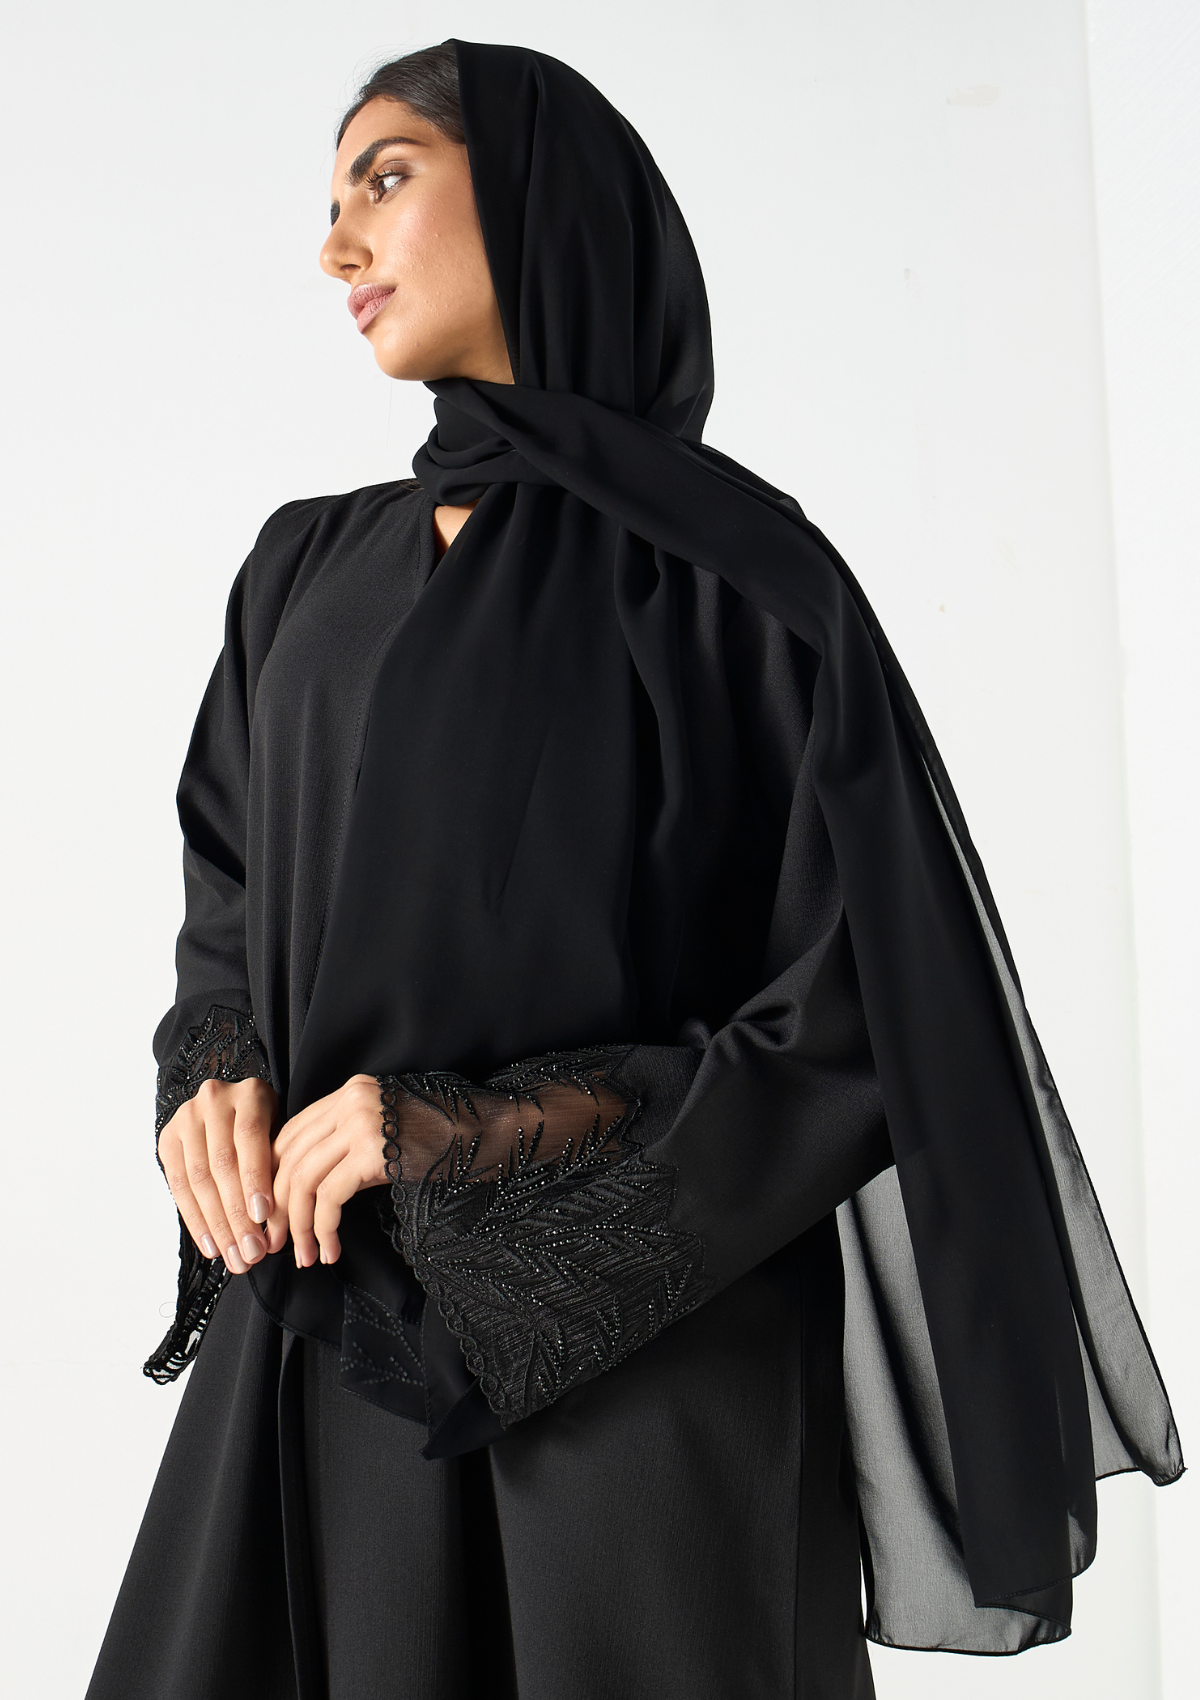 Embellished and Embroidered Abaya with Hijab